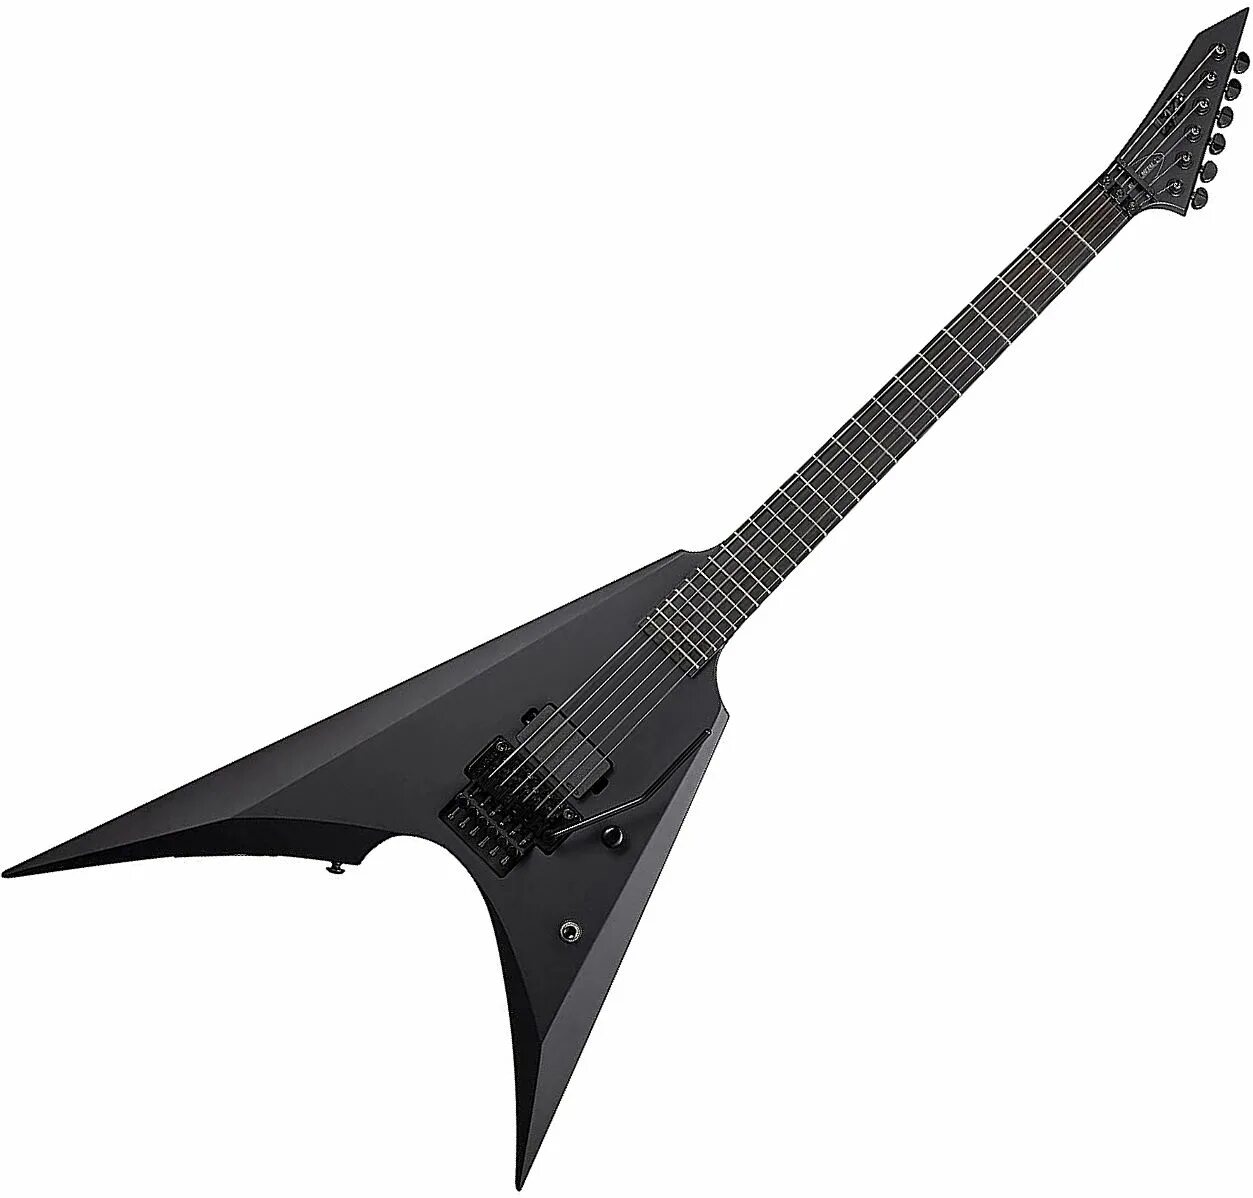 Электрогитара для металла. ESP Ltd Black Metal. Электрогитара ESP Ltd arrow. Гитара стрела ESP Ltd. Ltd arrow Black Metal.